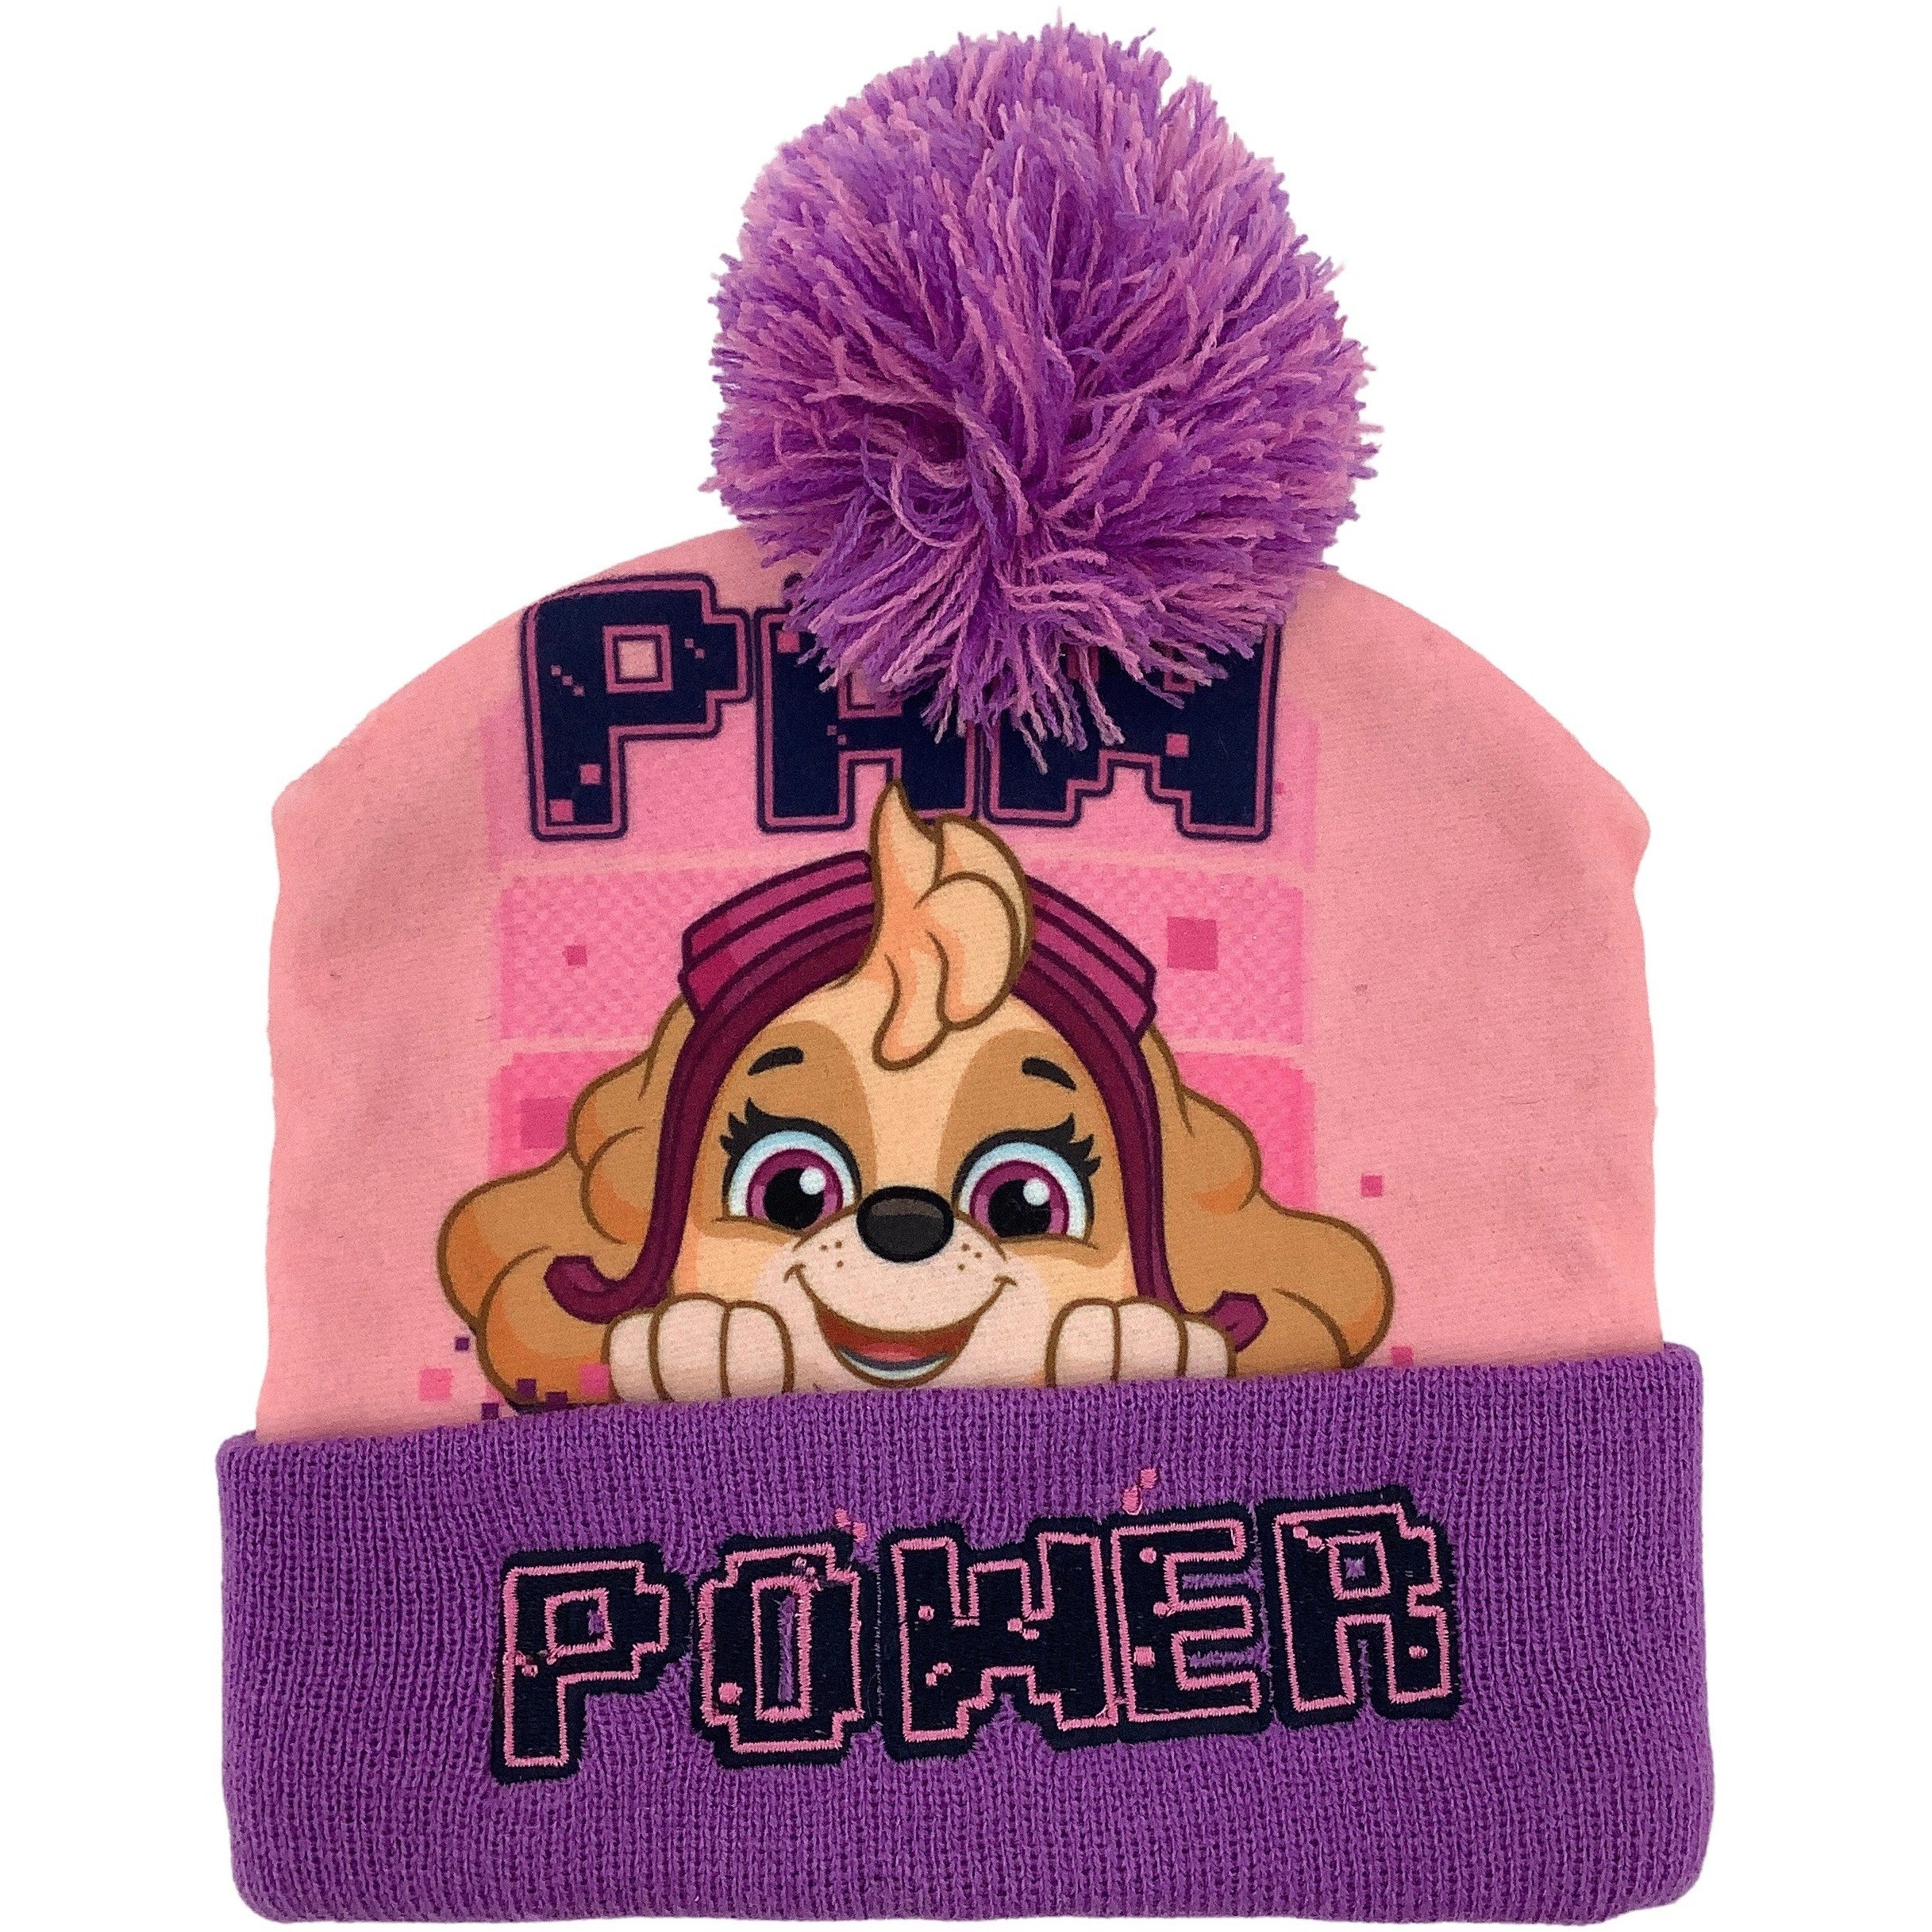 Nick Jr. Paw Patrol Girl's Winter Hat: Pink and Purple